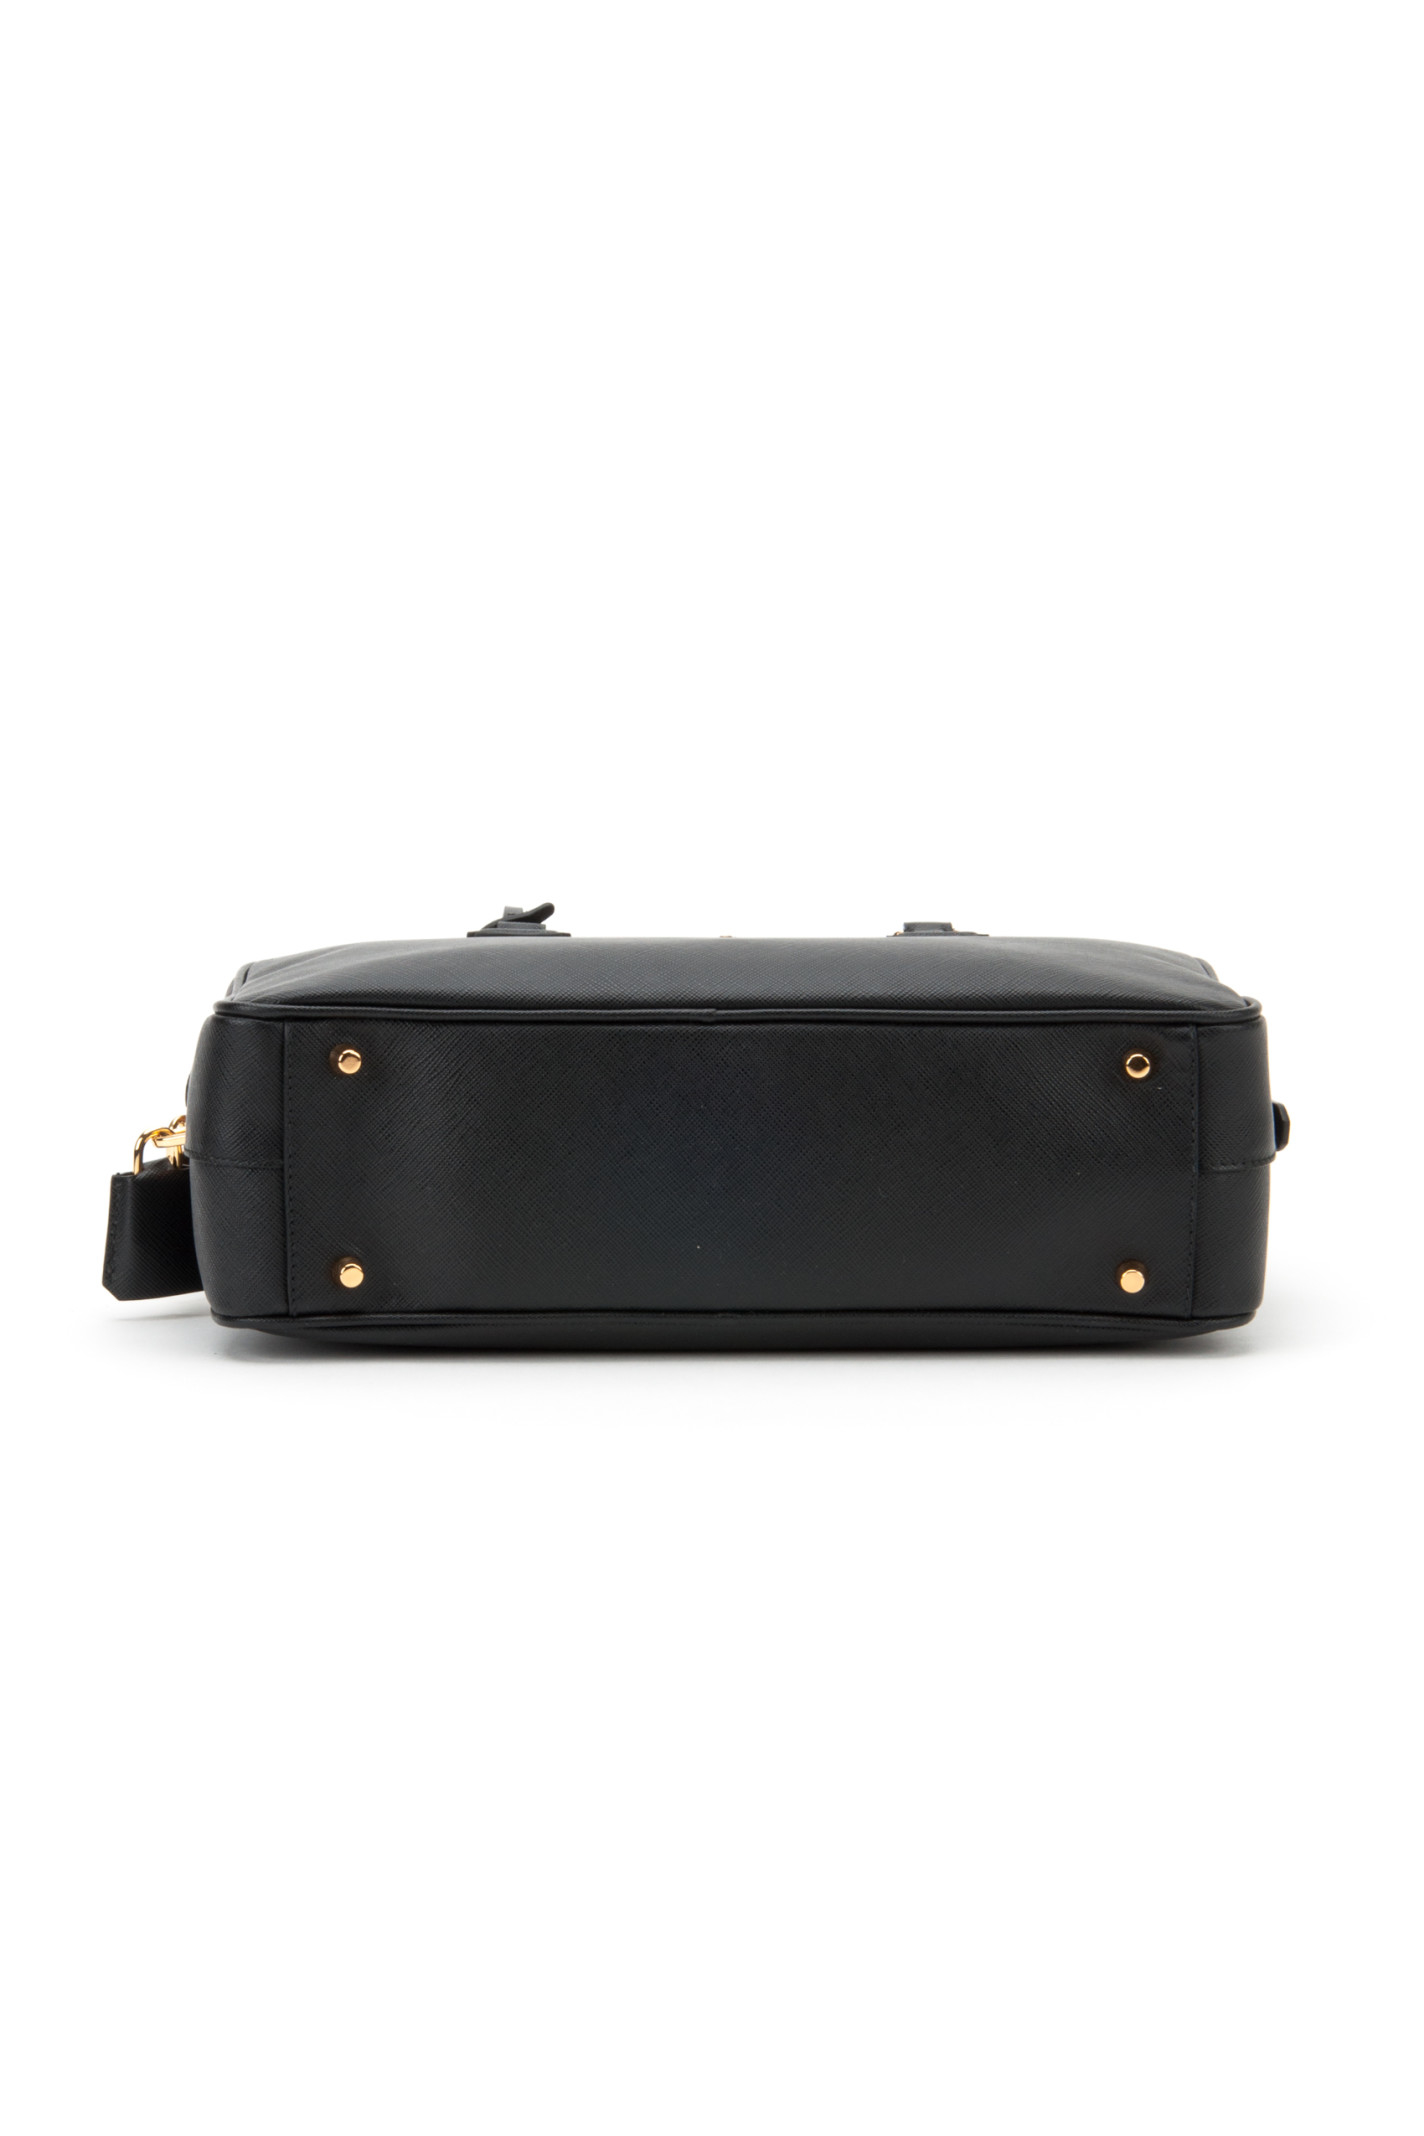 Prada Lux Saffiano Bowling Bag in Black (NERO) | Lyst  